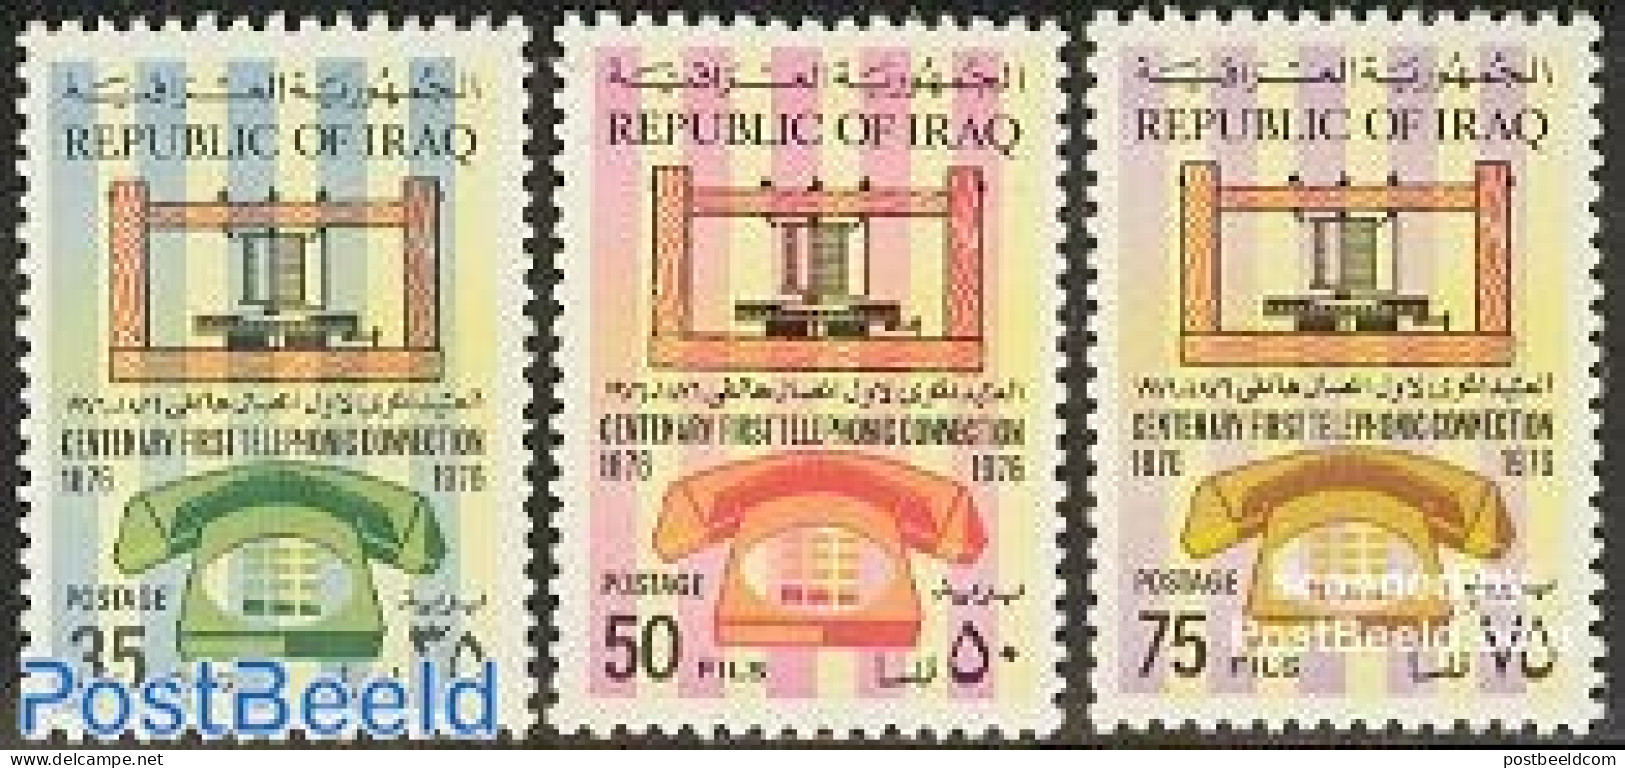 Iraq 1976 Telephone Centenary 3v, Mint NH, Science - Telecommunication - Telephones - Telekom